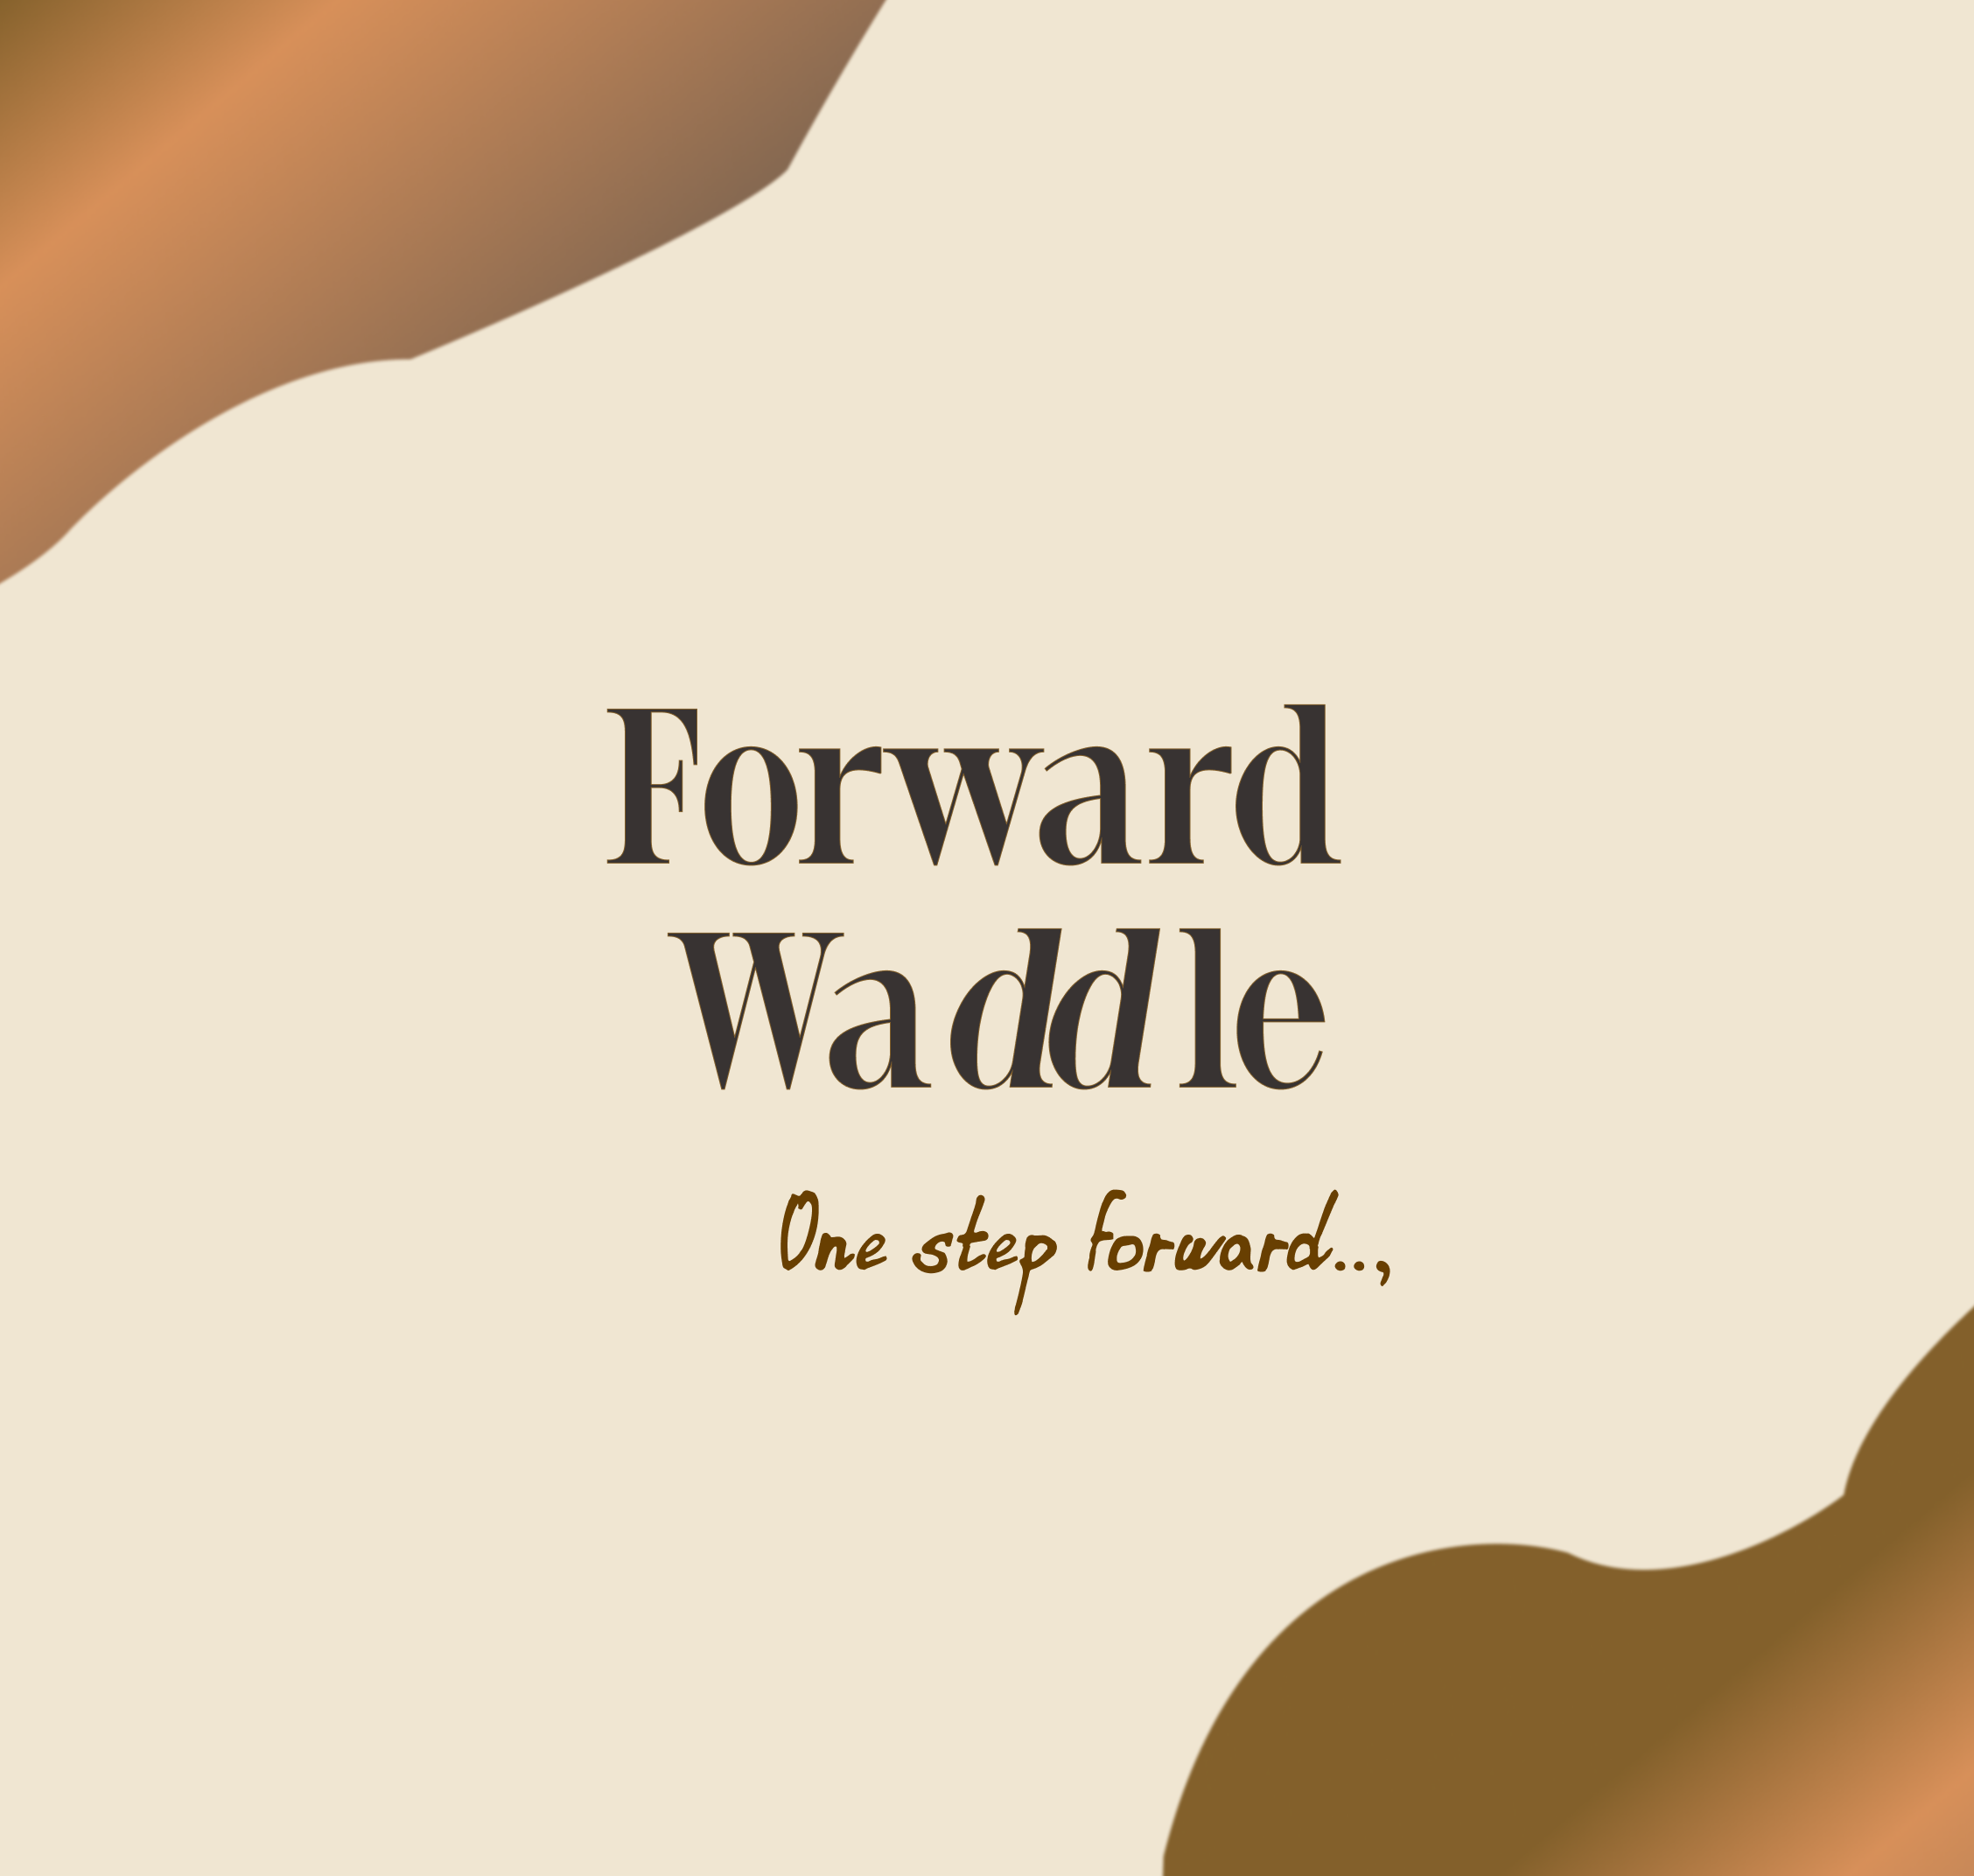 Forward Waddle